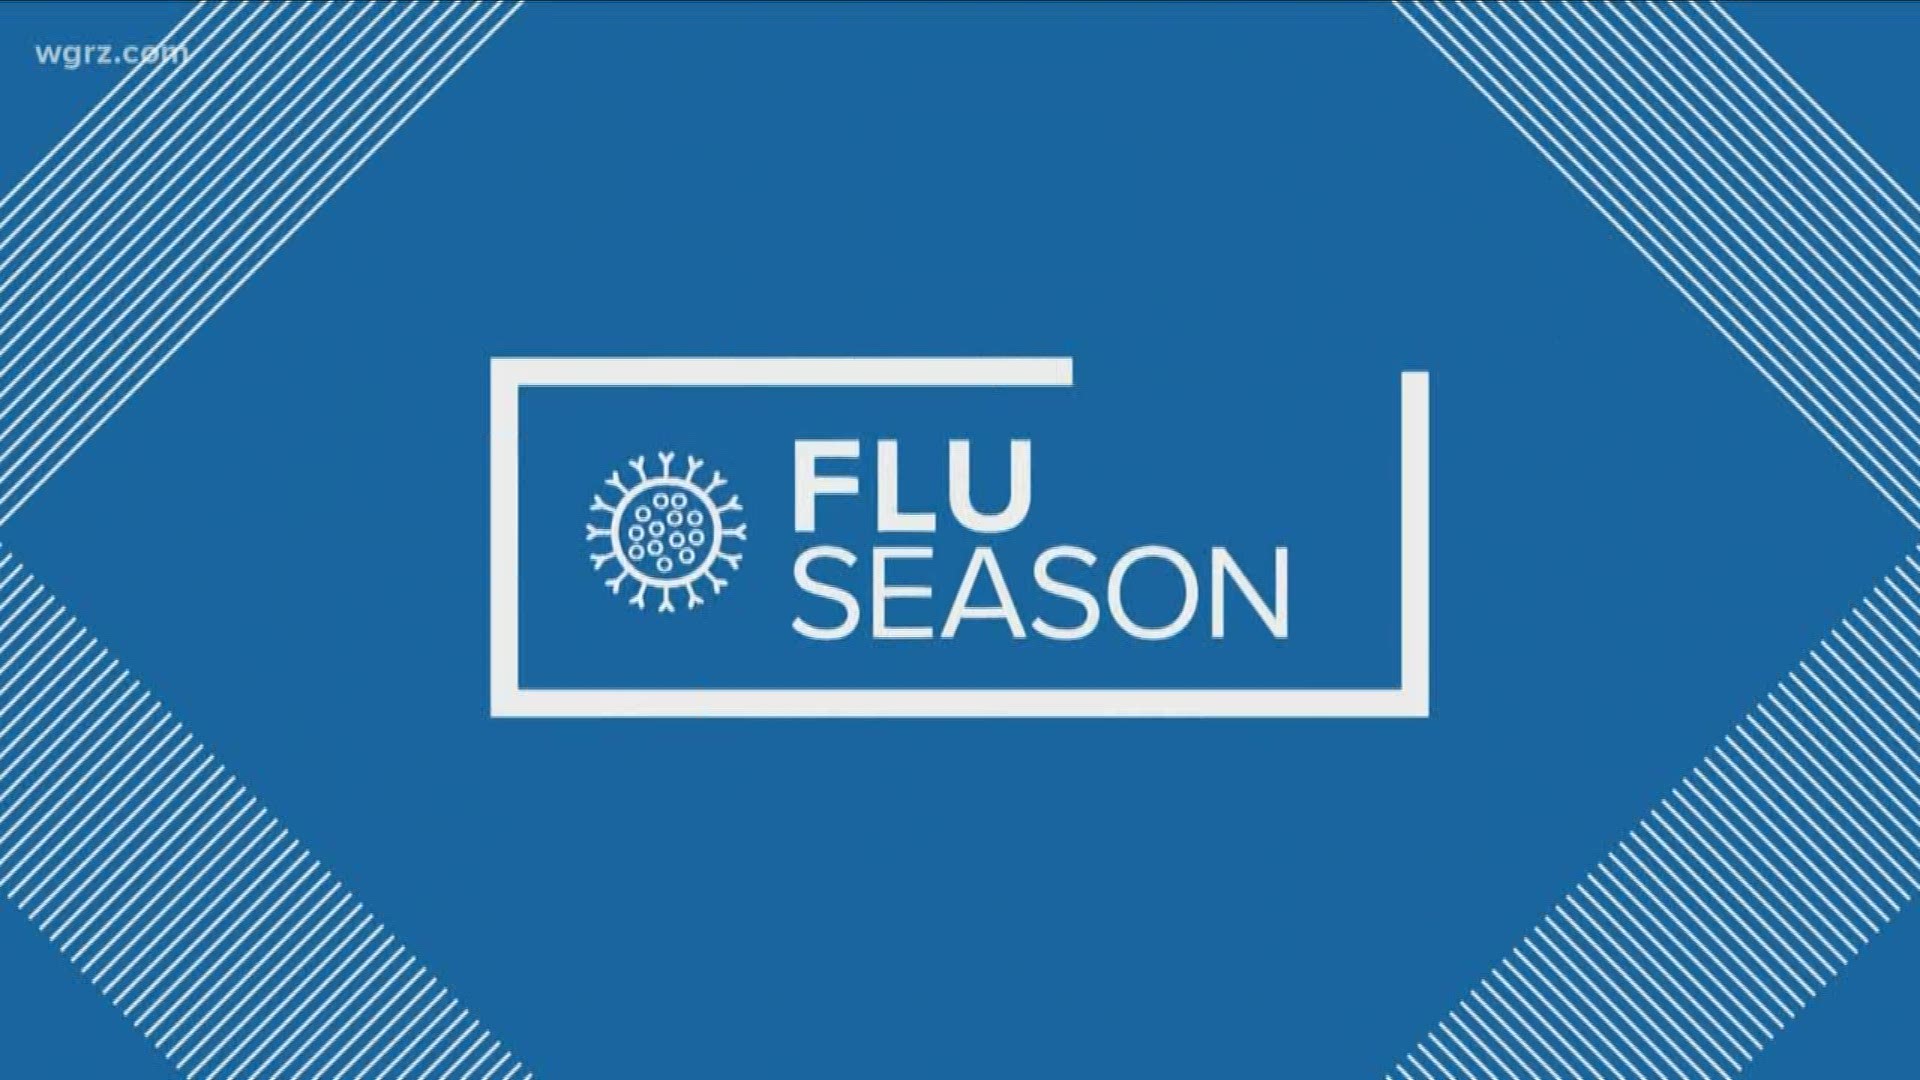 Health officials say we haven't reached peak flu season yet